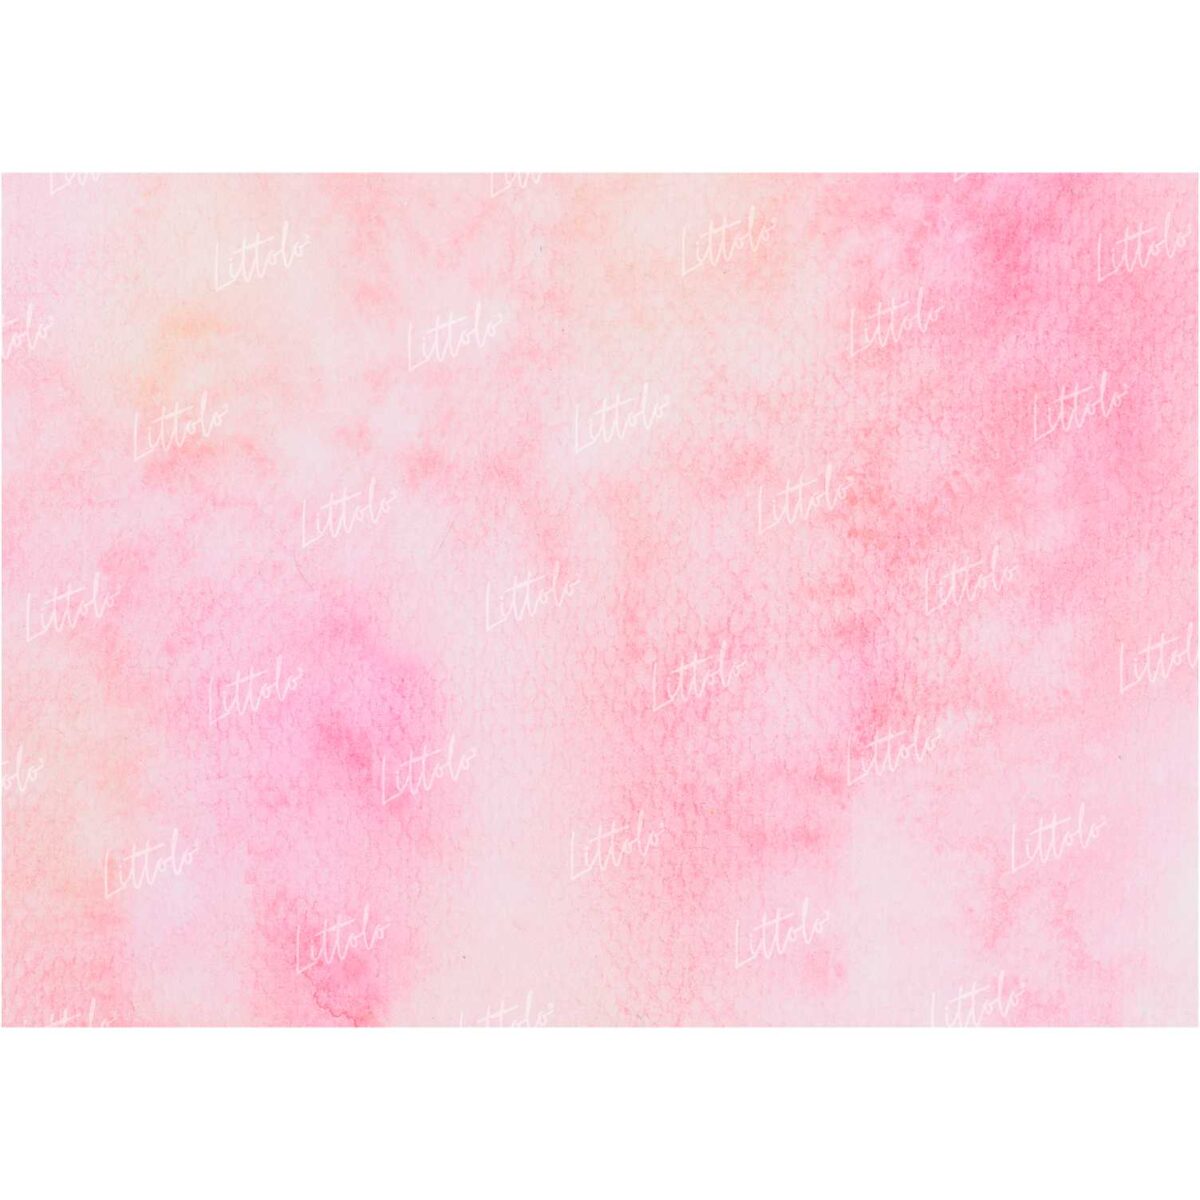 LB0030 Mermaid Fins Pink Shades Texture Backdrop